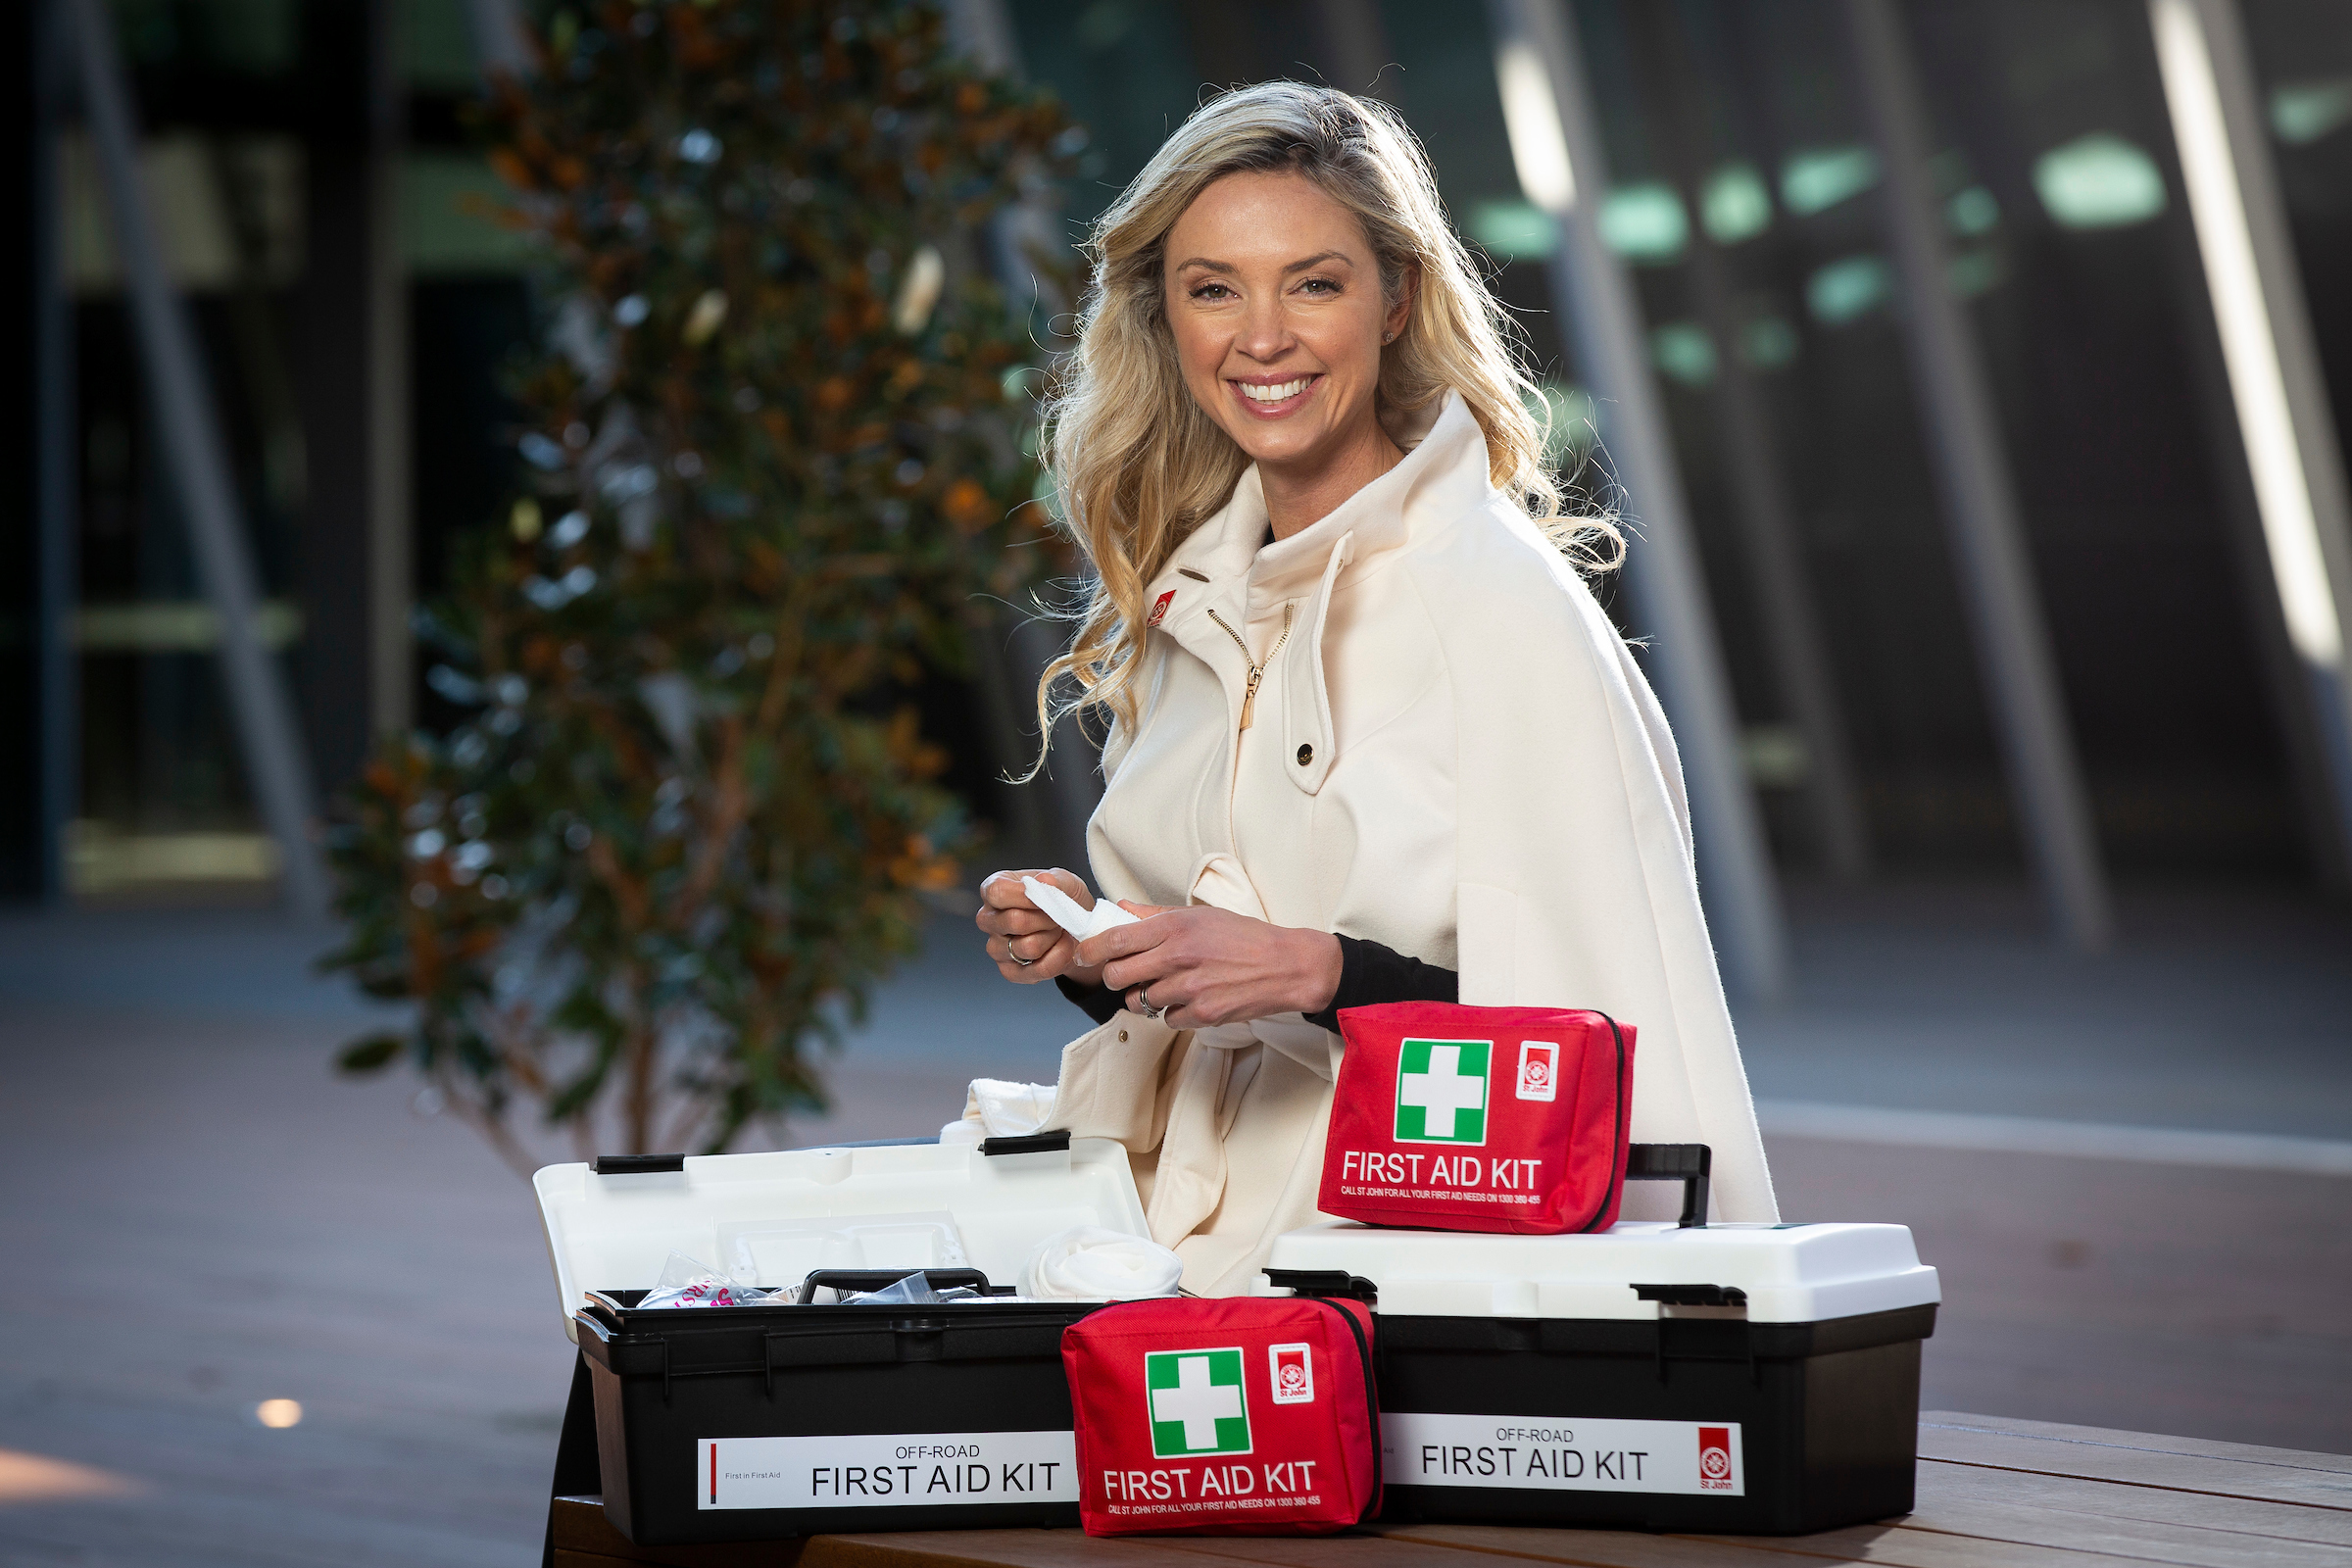 St Johns Ambulance blonde woman sitting next to first aid kits